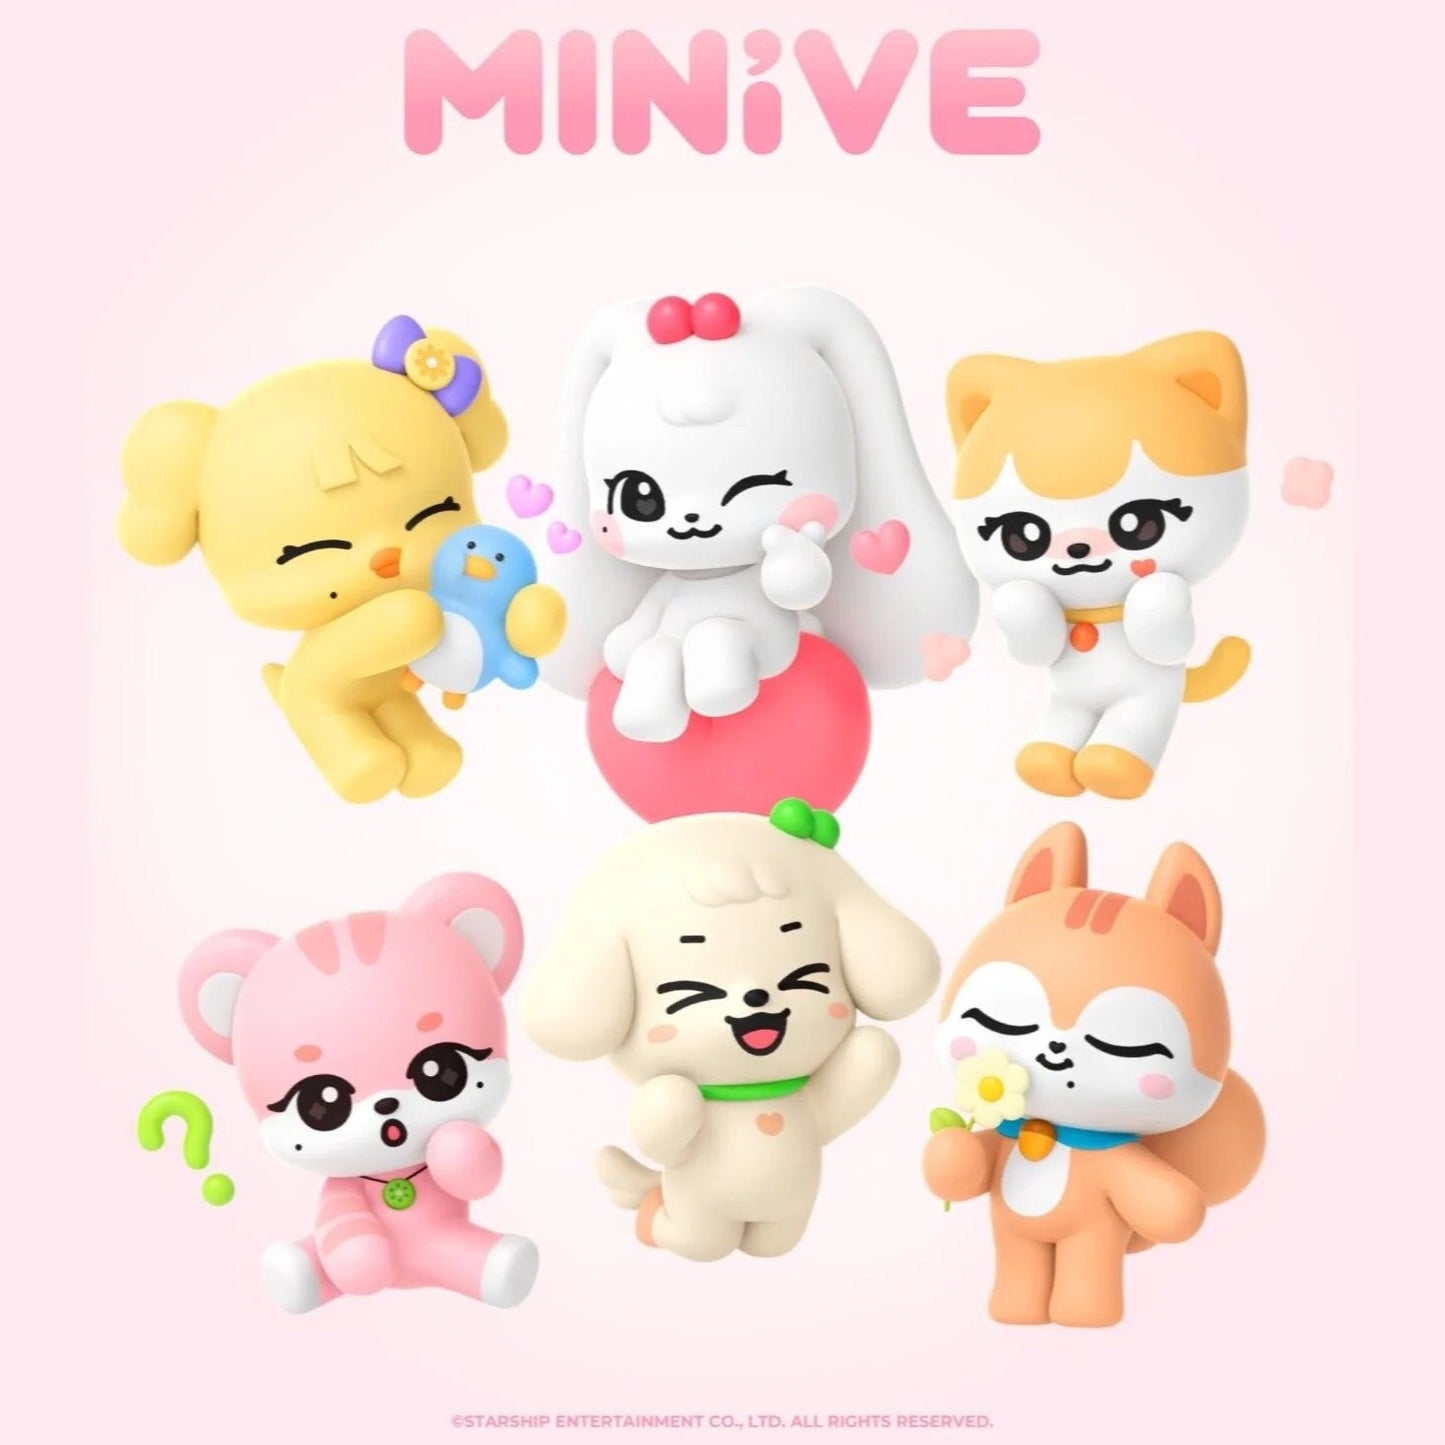 IVE MINIVE Character Plush Doll